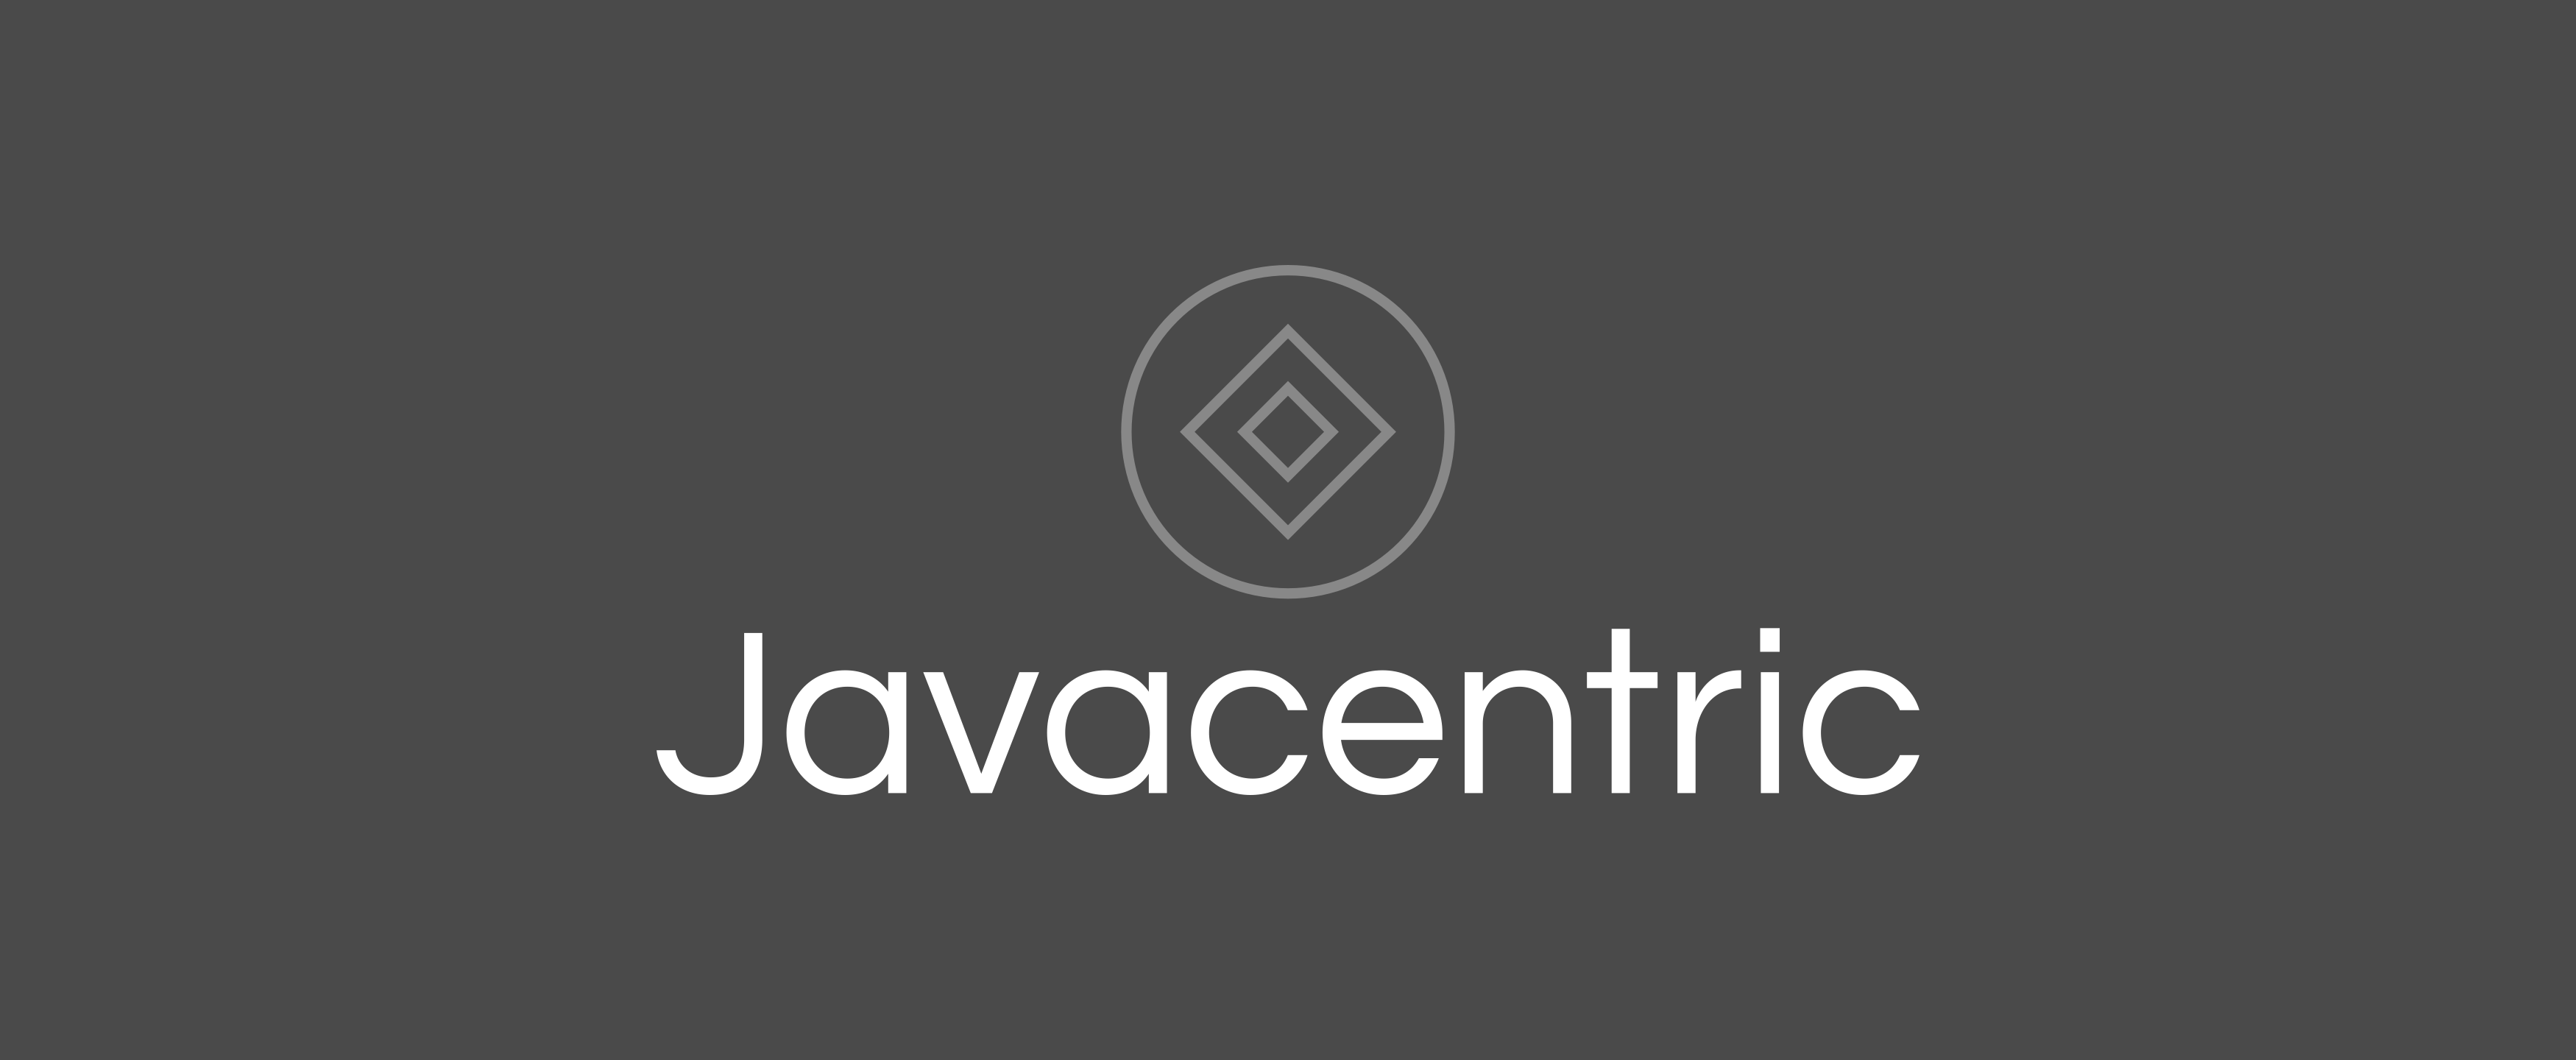 Javacentric Logo